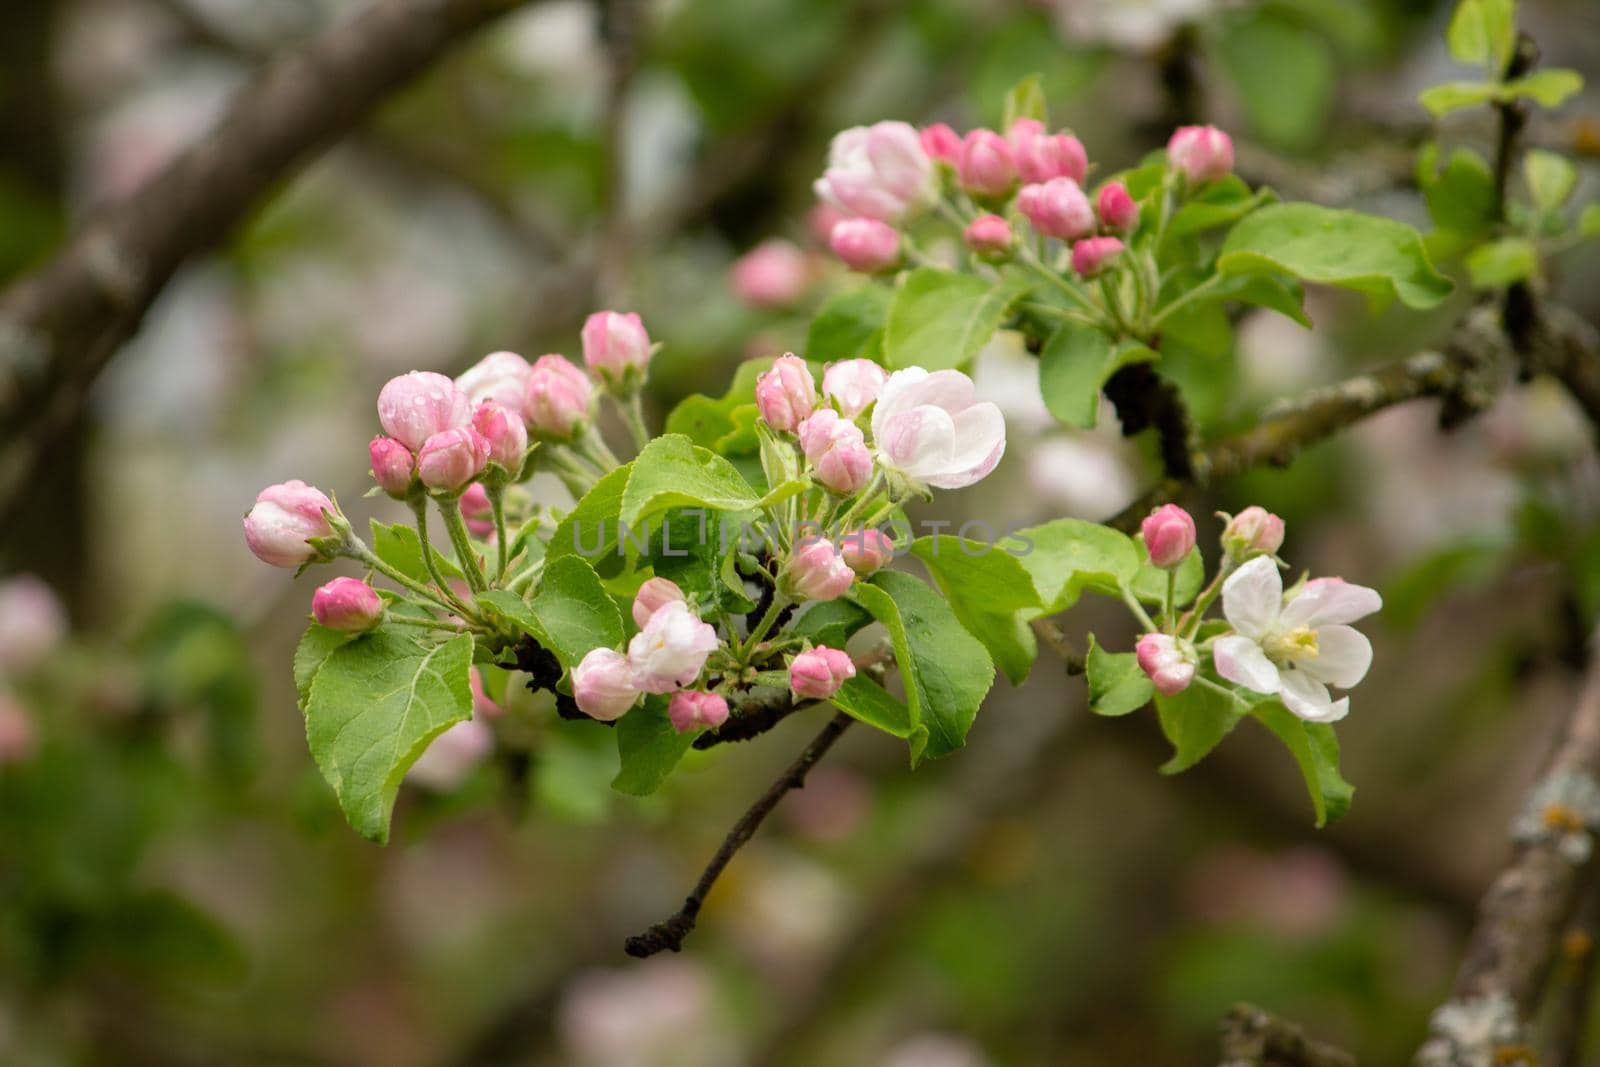 A close up of a flower apple tree blossom by SorokinNikita